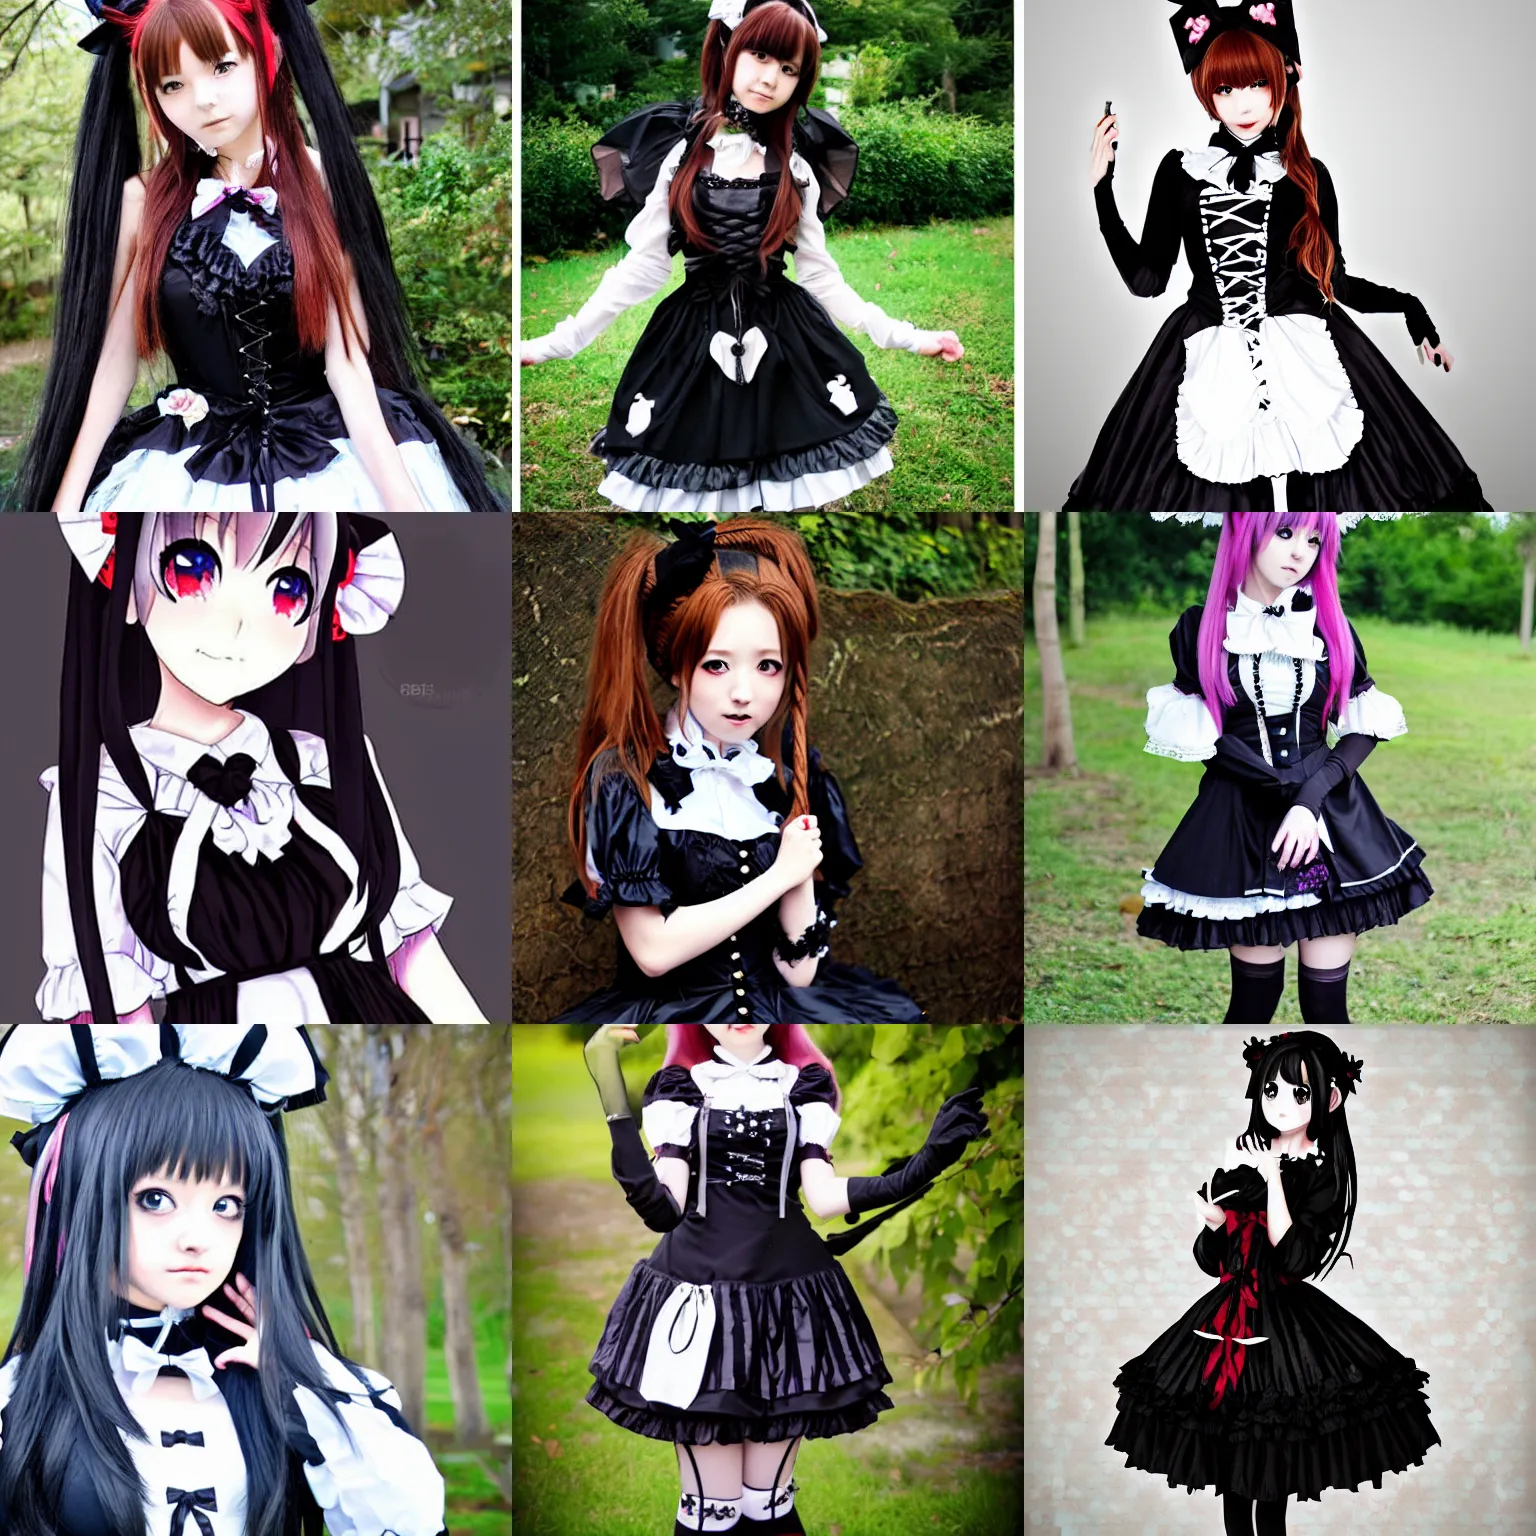 Prompt: anime girl wearing gothic lolita dress